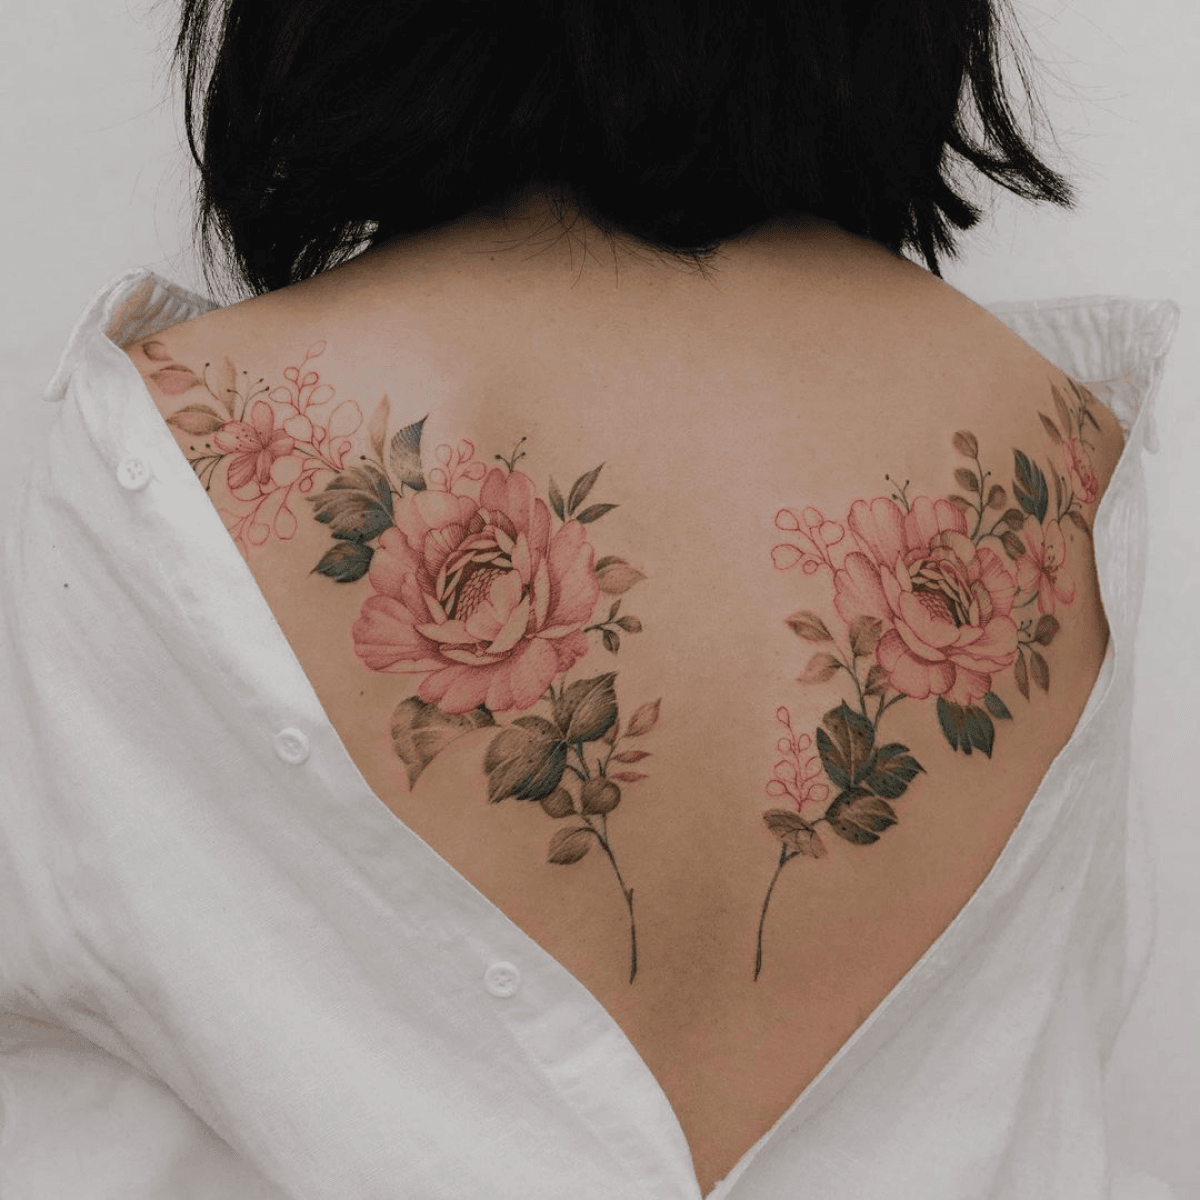 March birth flowers | Birth flower tattoos, Time tattoos, Line art tattoos